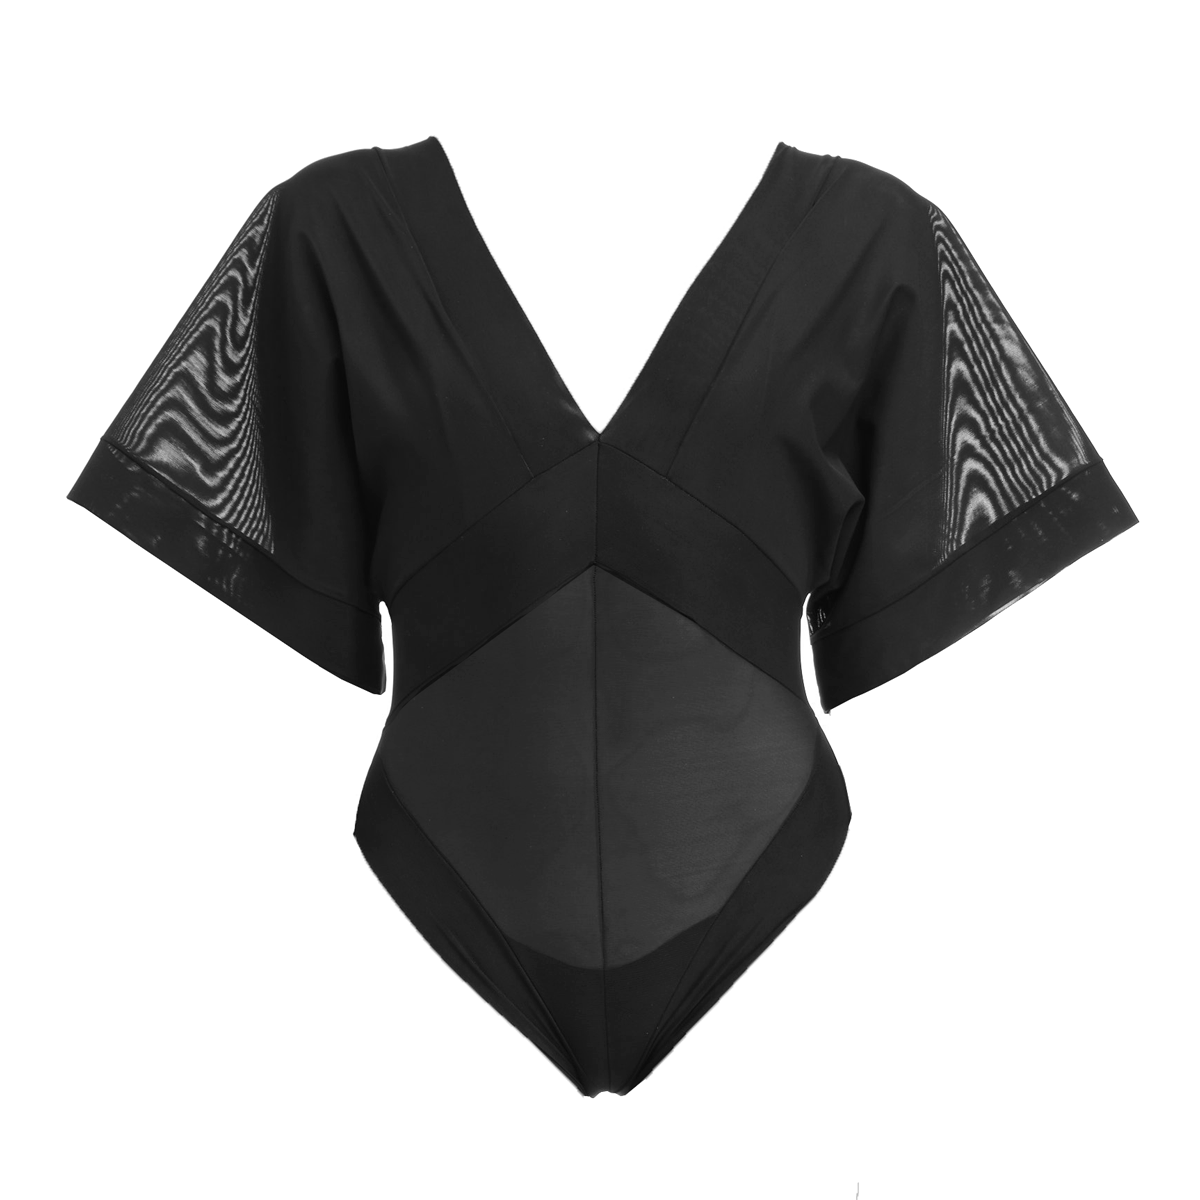 DSTM Chevron plain mesh, sheer bodysuit with elegant kimono sleeves European luxury lingerie and loungewear